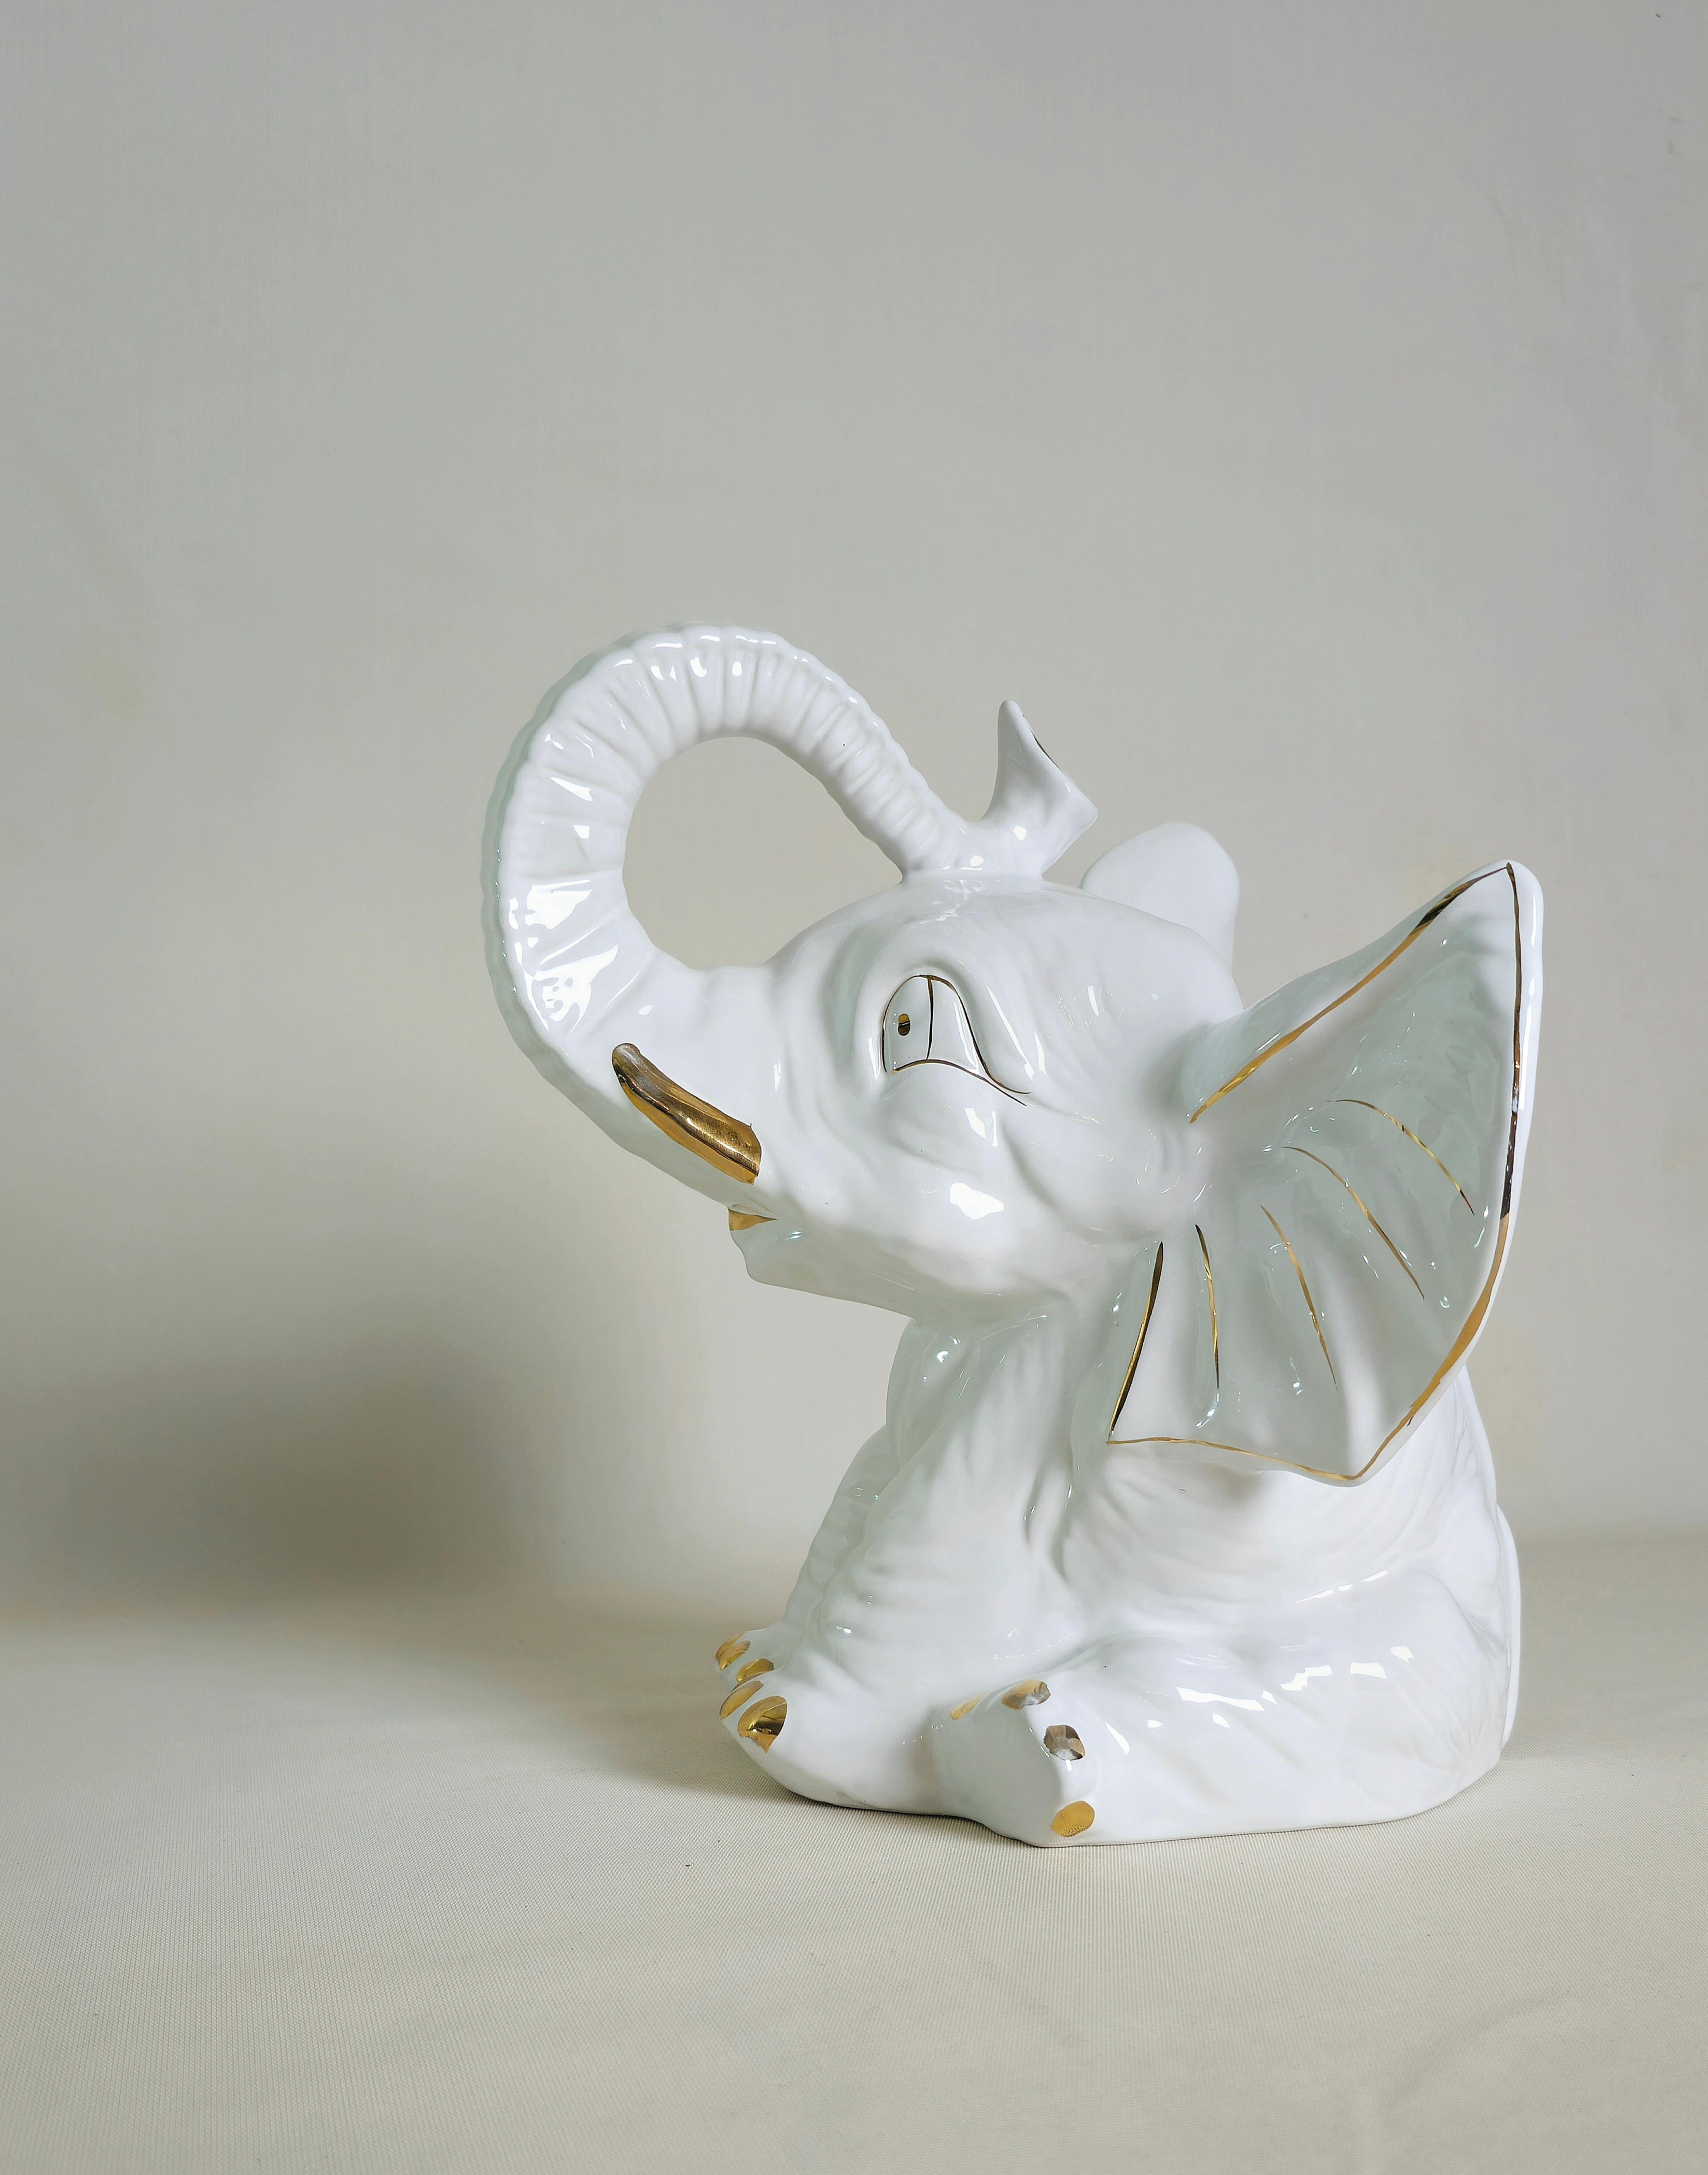 Decorative Object Elephant Porcelain Midcentury Modern Italian Design 1970s For Sale 1